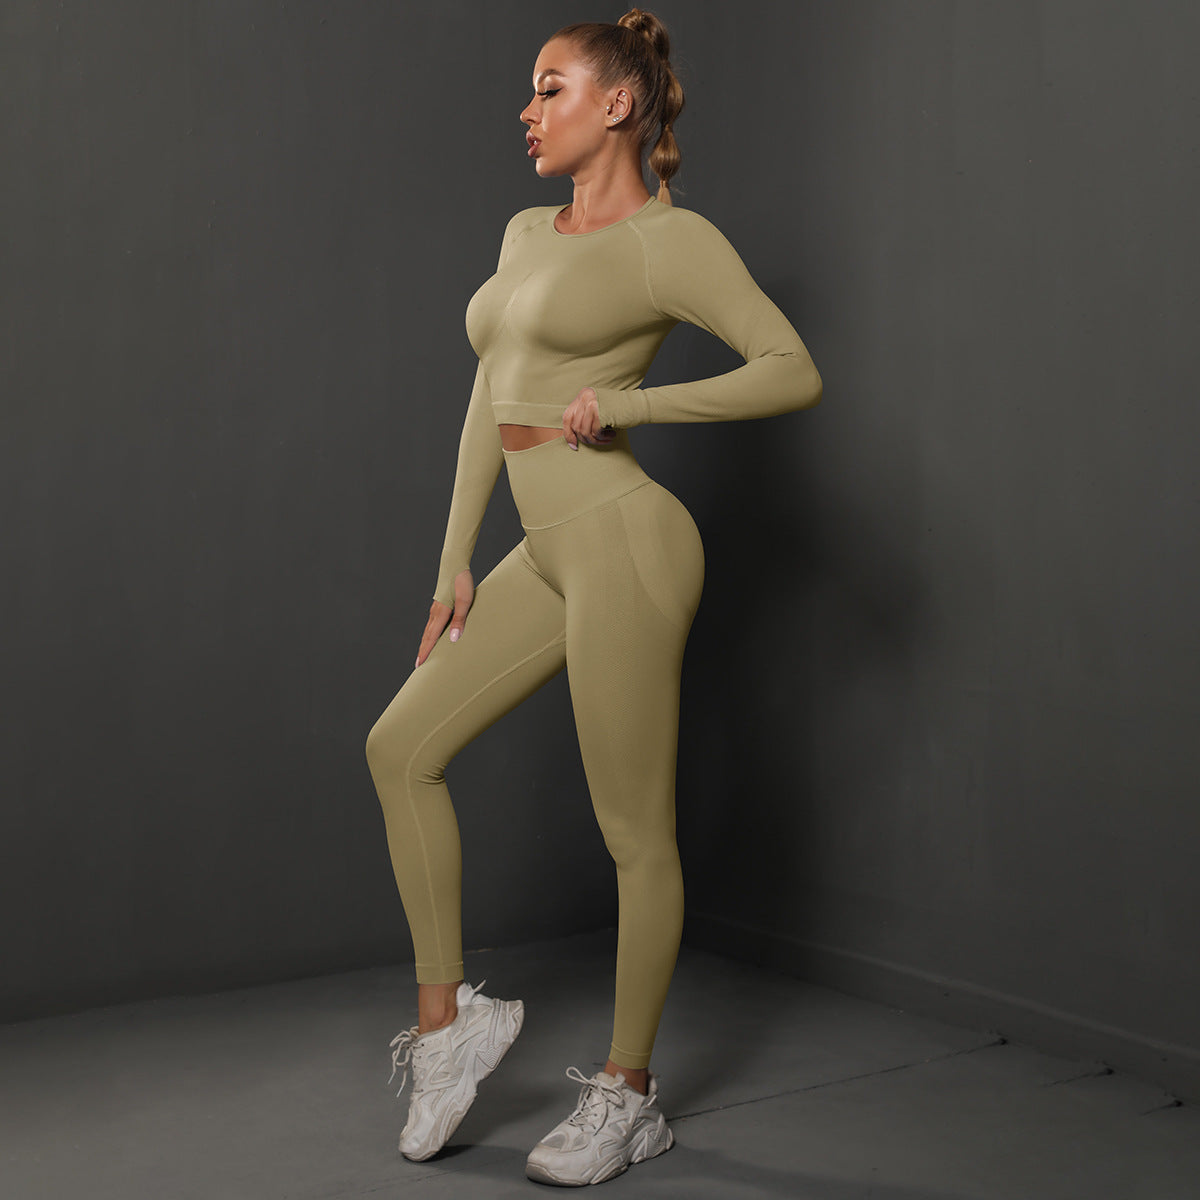 Fashion Simple Style Sports Yoga Suits for Women-Activewear-Khaki-S-Free Shipping Leatheretro